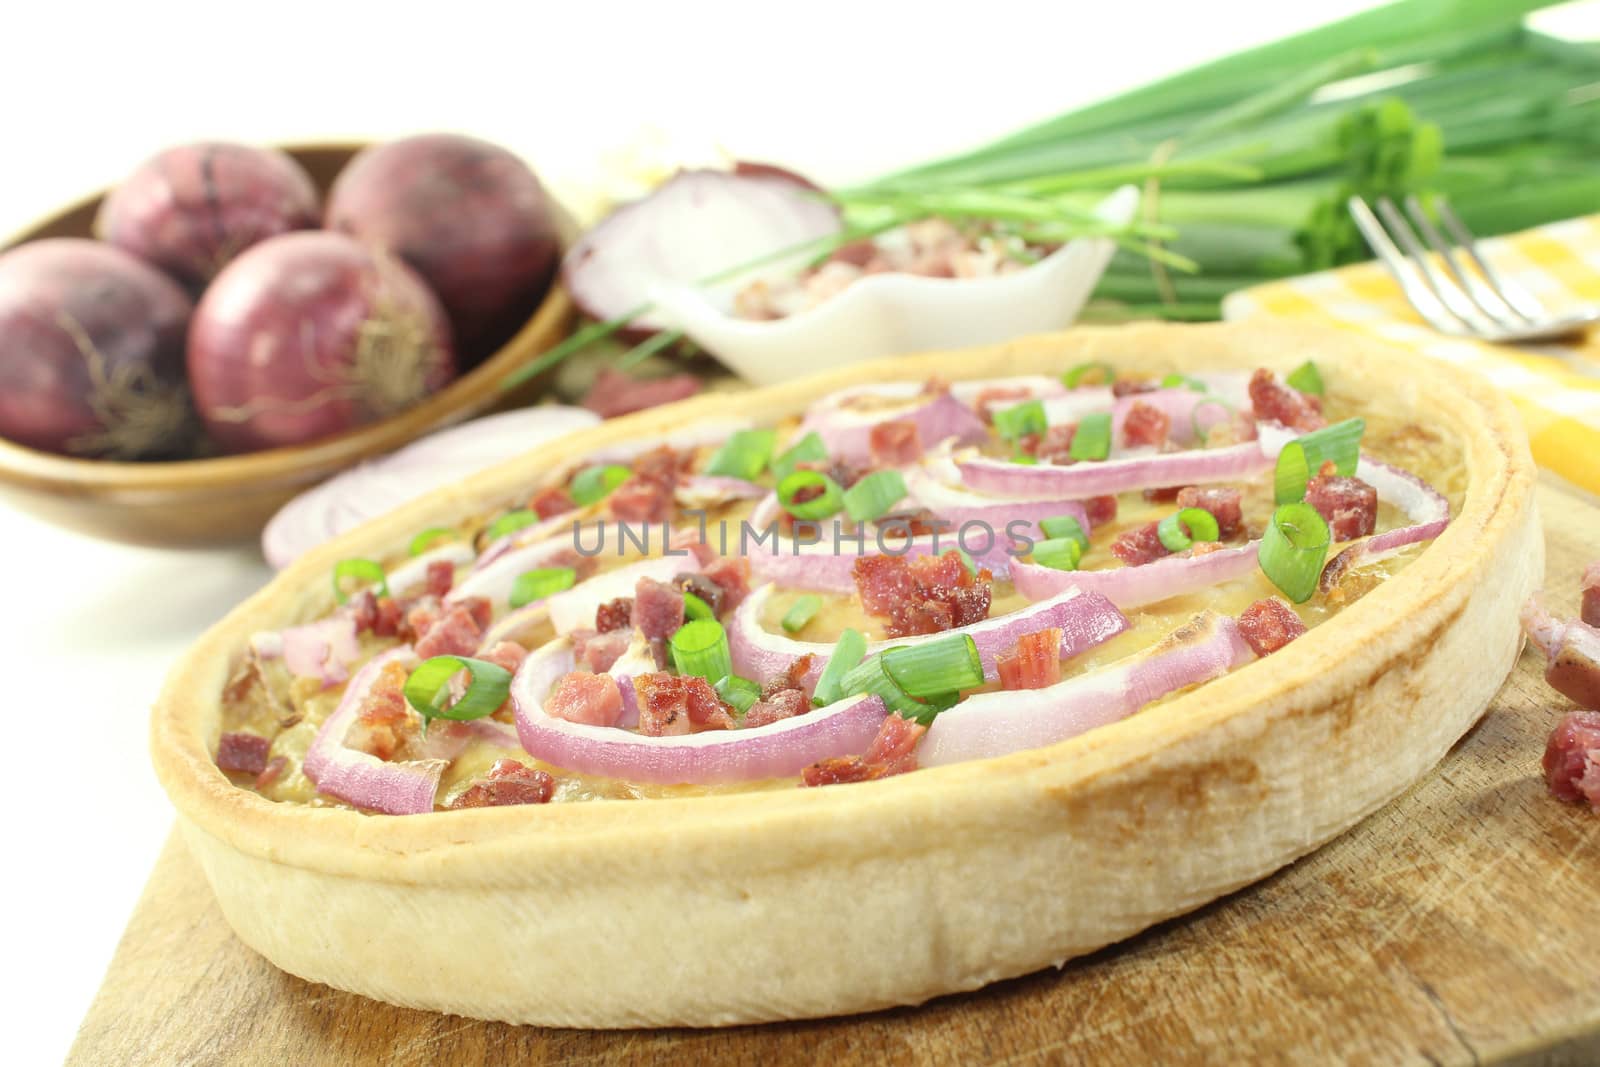 Onion tart with leeks on a light background